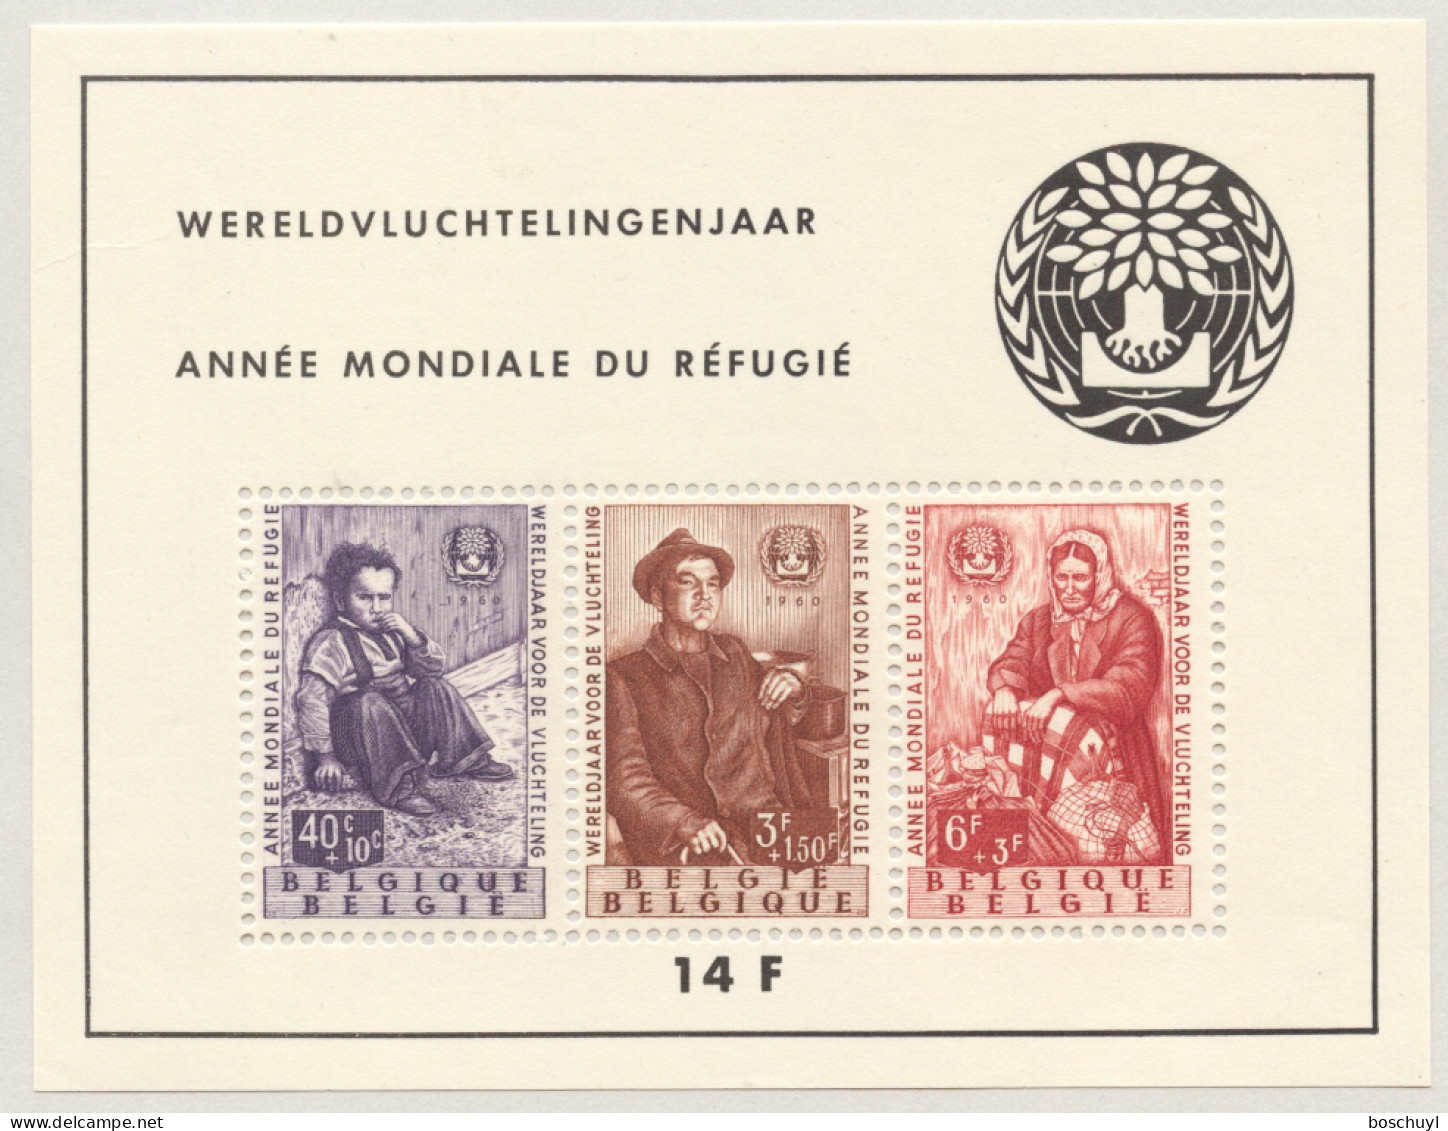 Belgium, 1960, World Refugee Year, WRY, United Nations, MNH, Michel Block 26 - Refugees